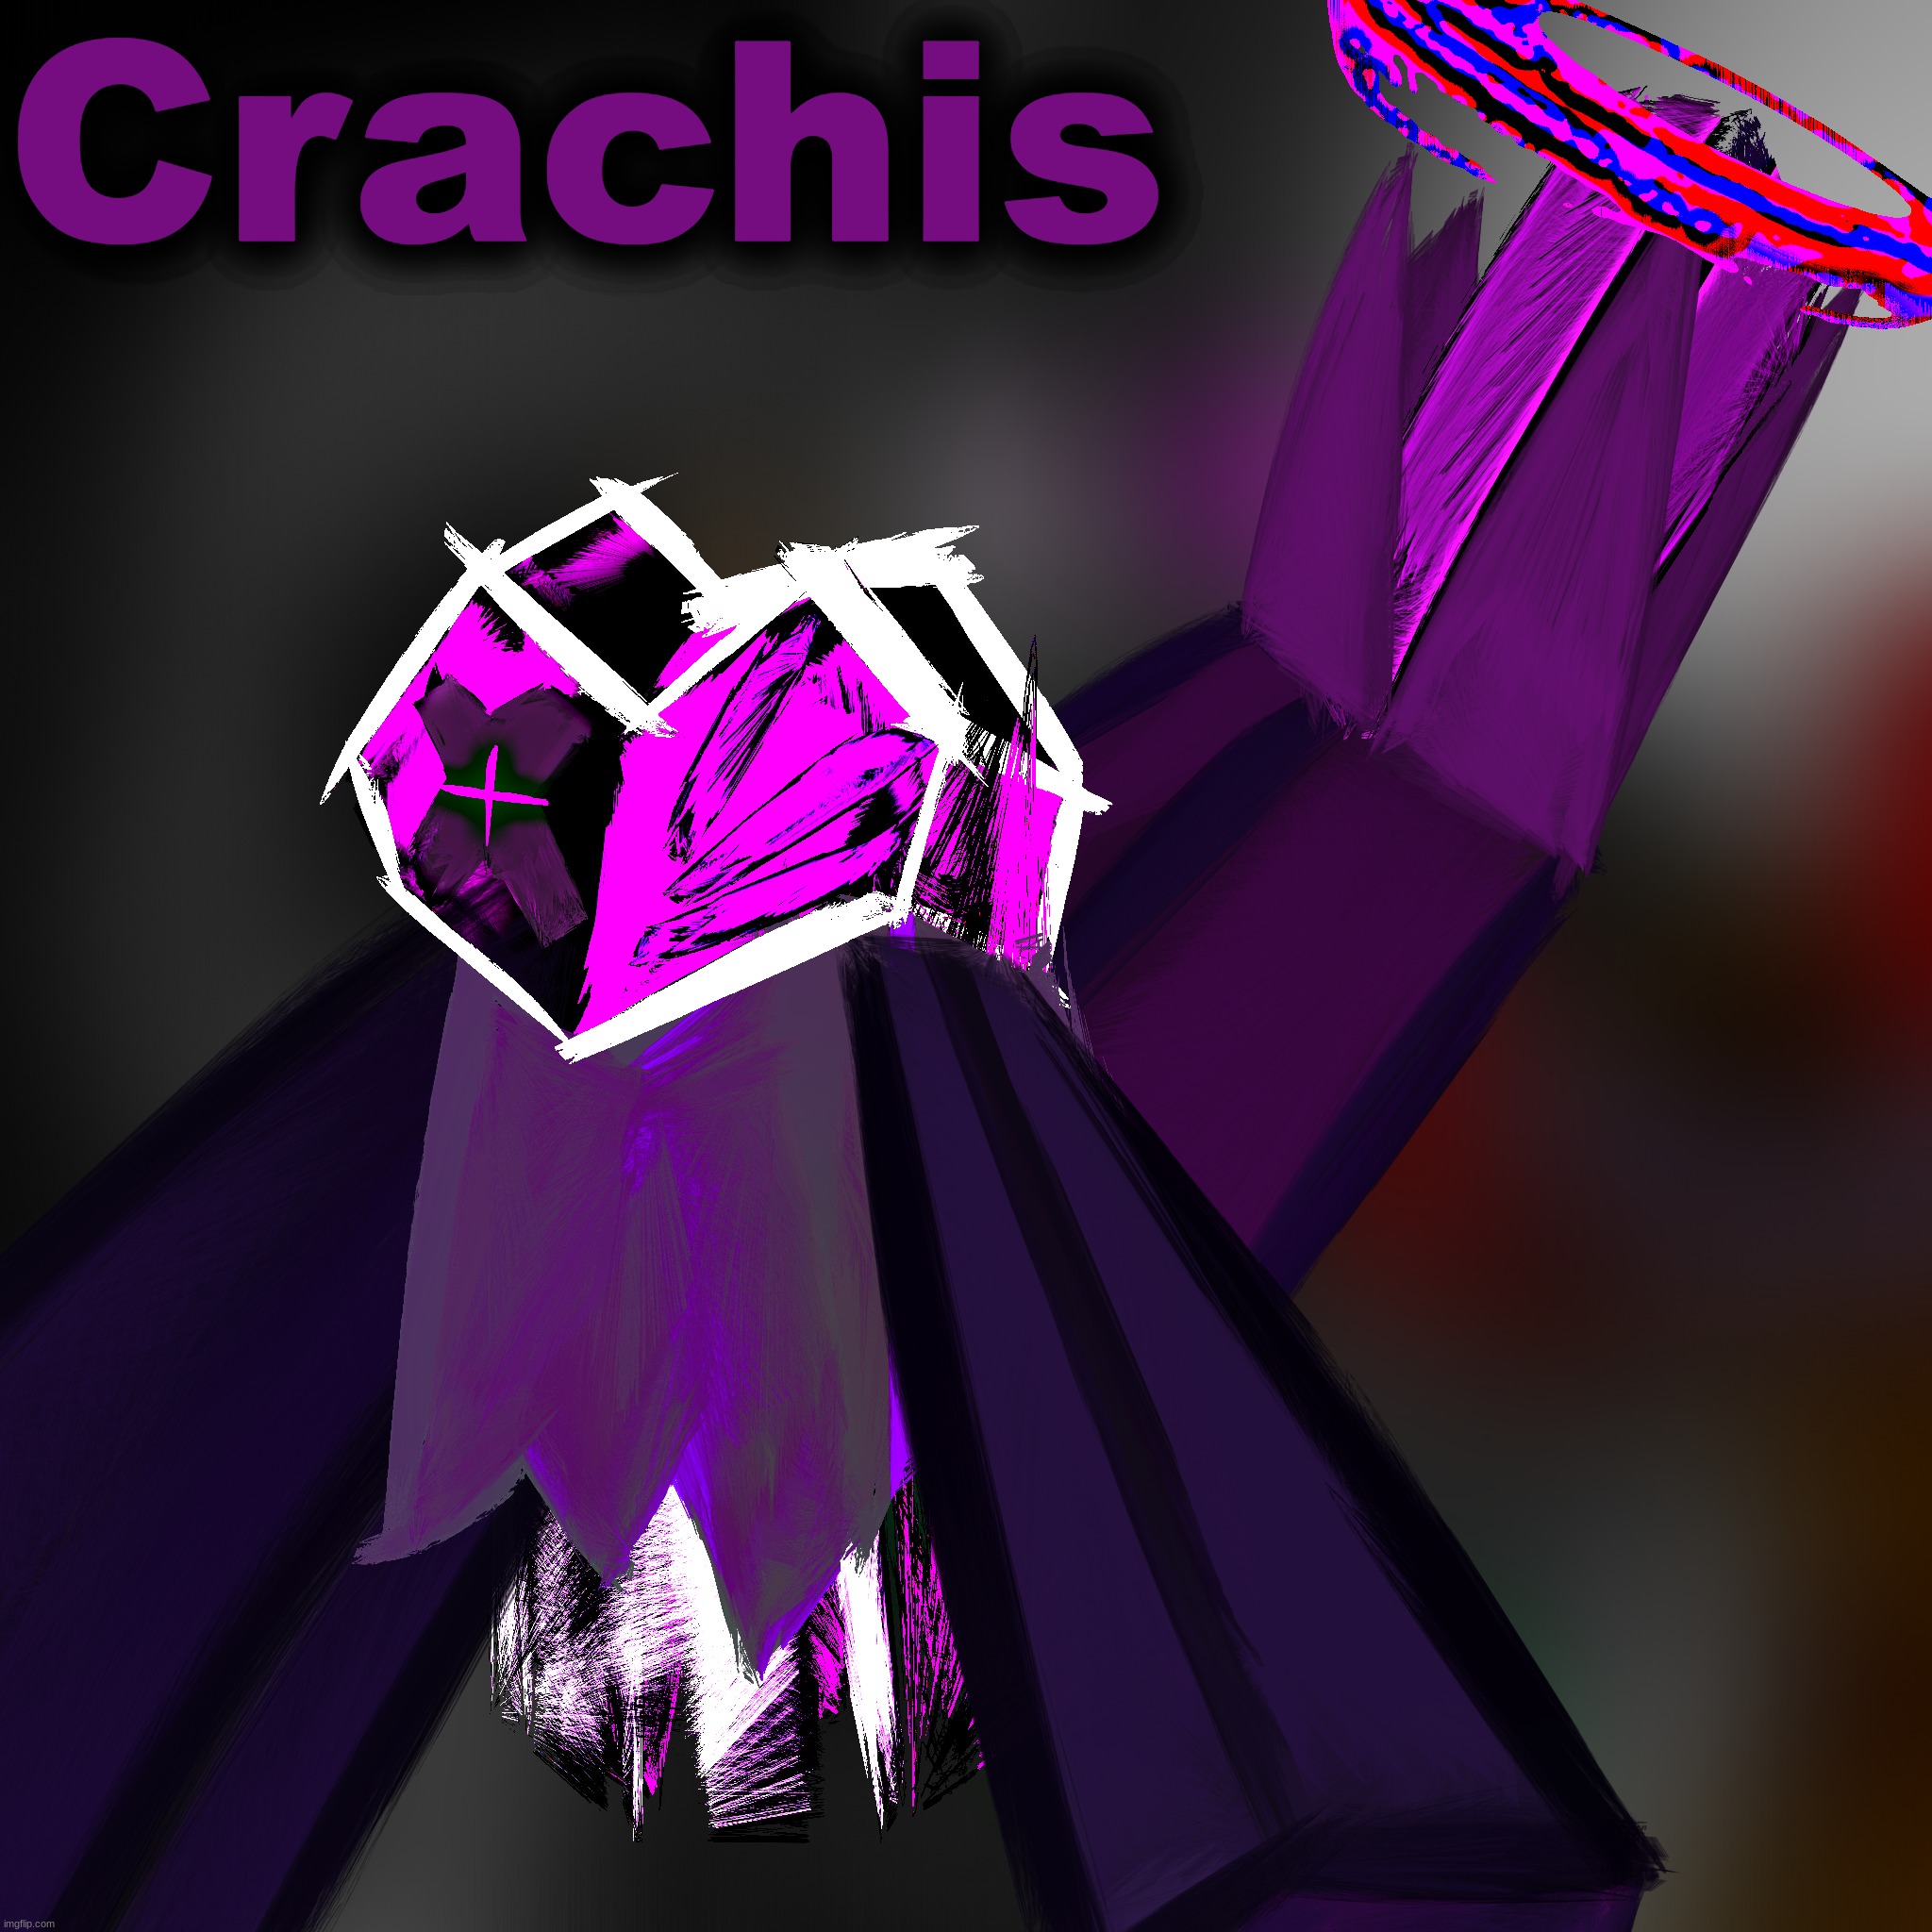 Crachis | made w/ Imgflip meme maker